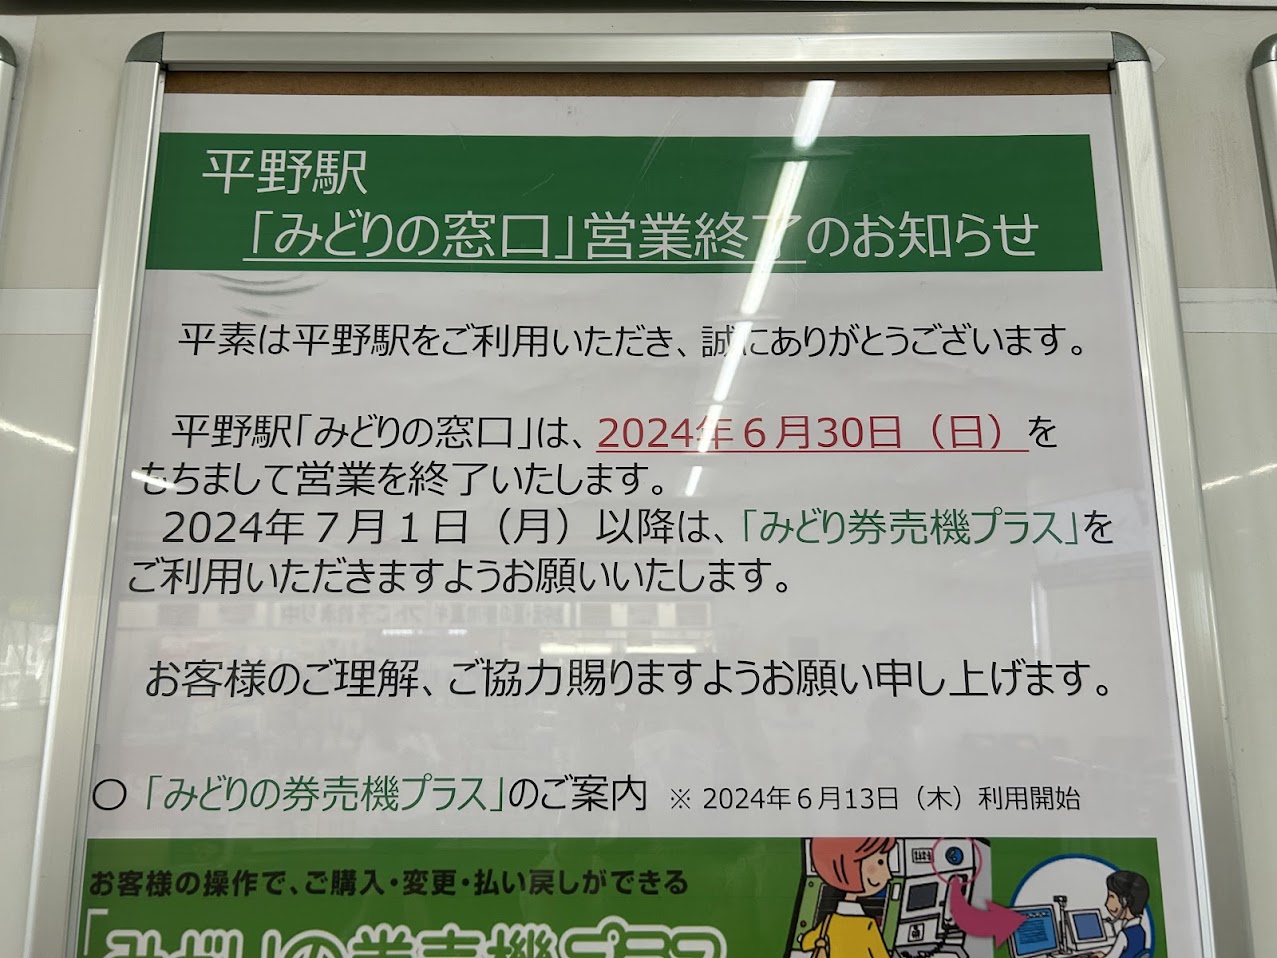 JR平野駅みどりの窓口営業終了のお知らせ2